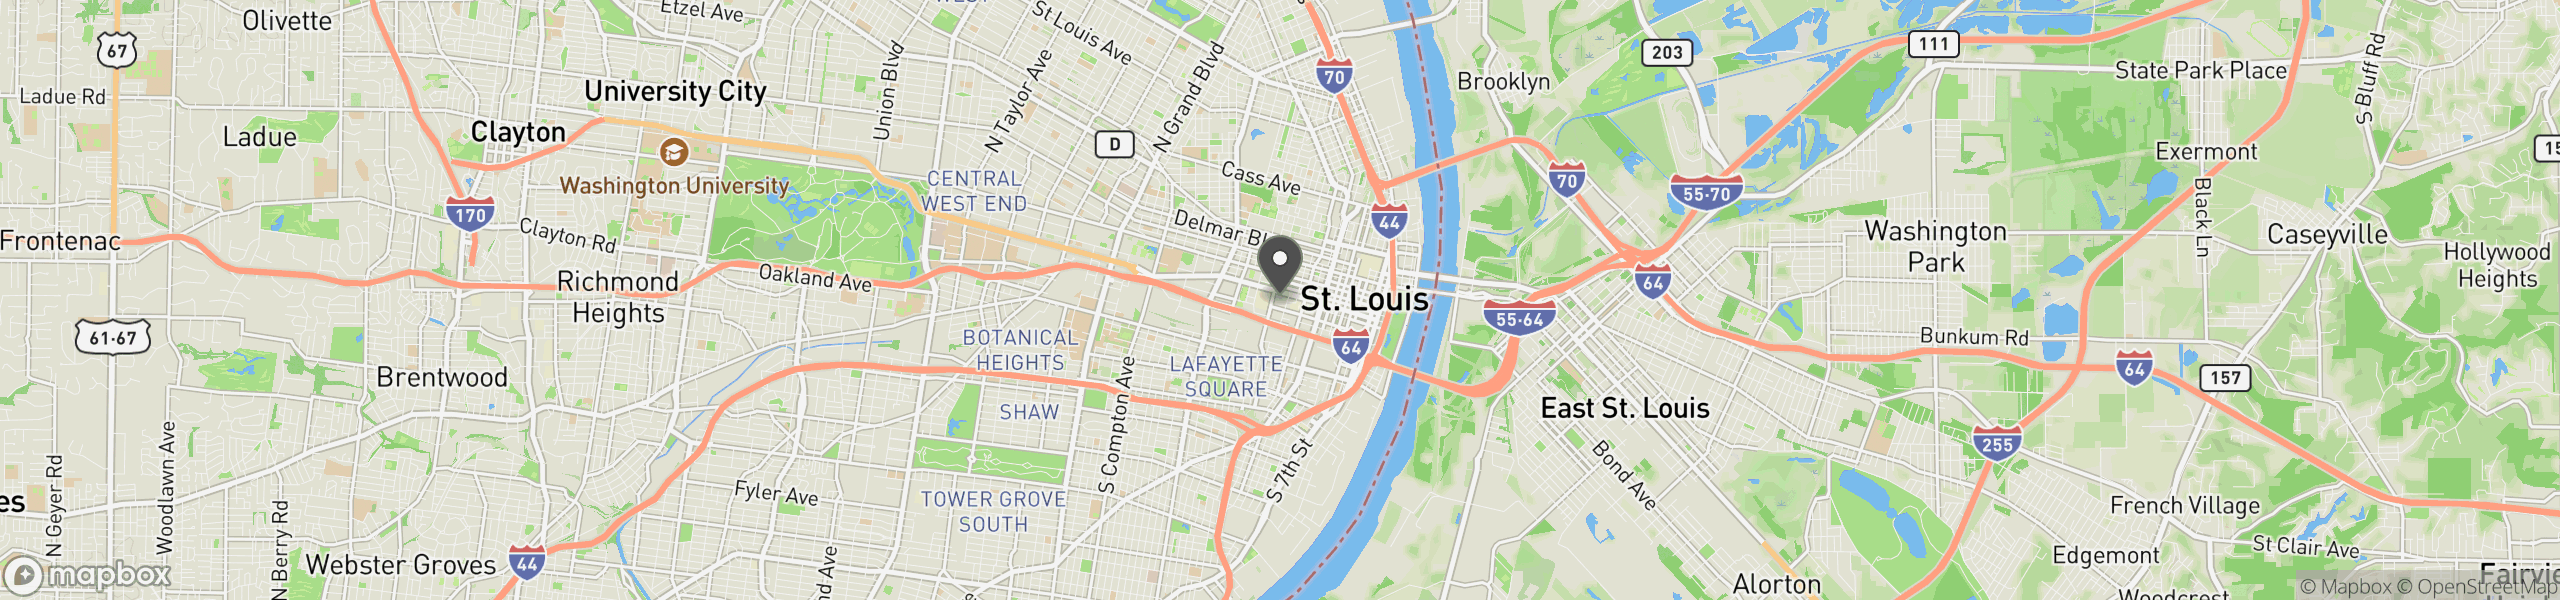 Saint Louis, MO 63155